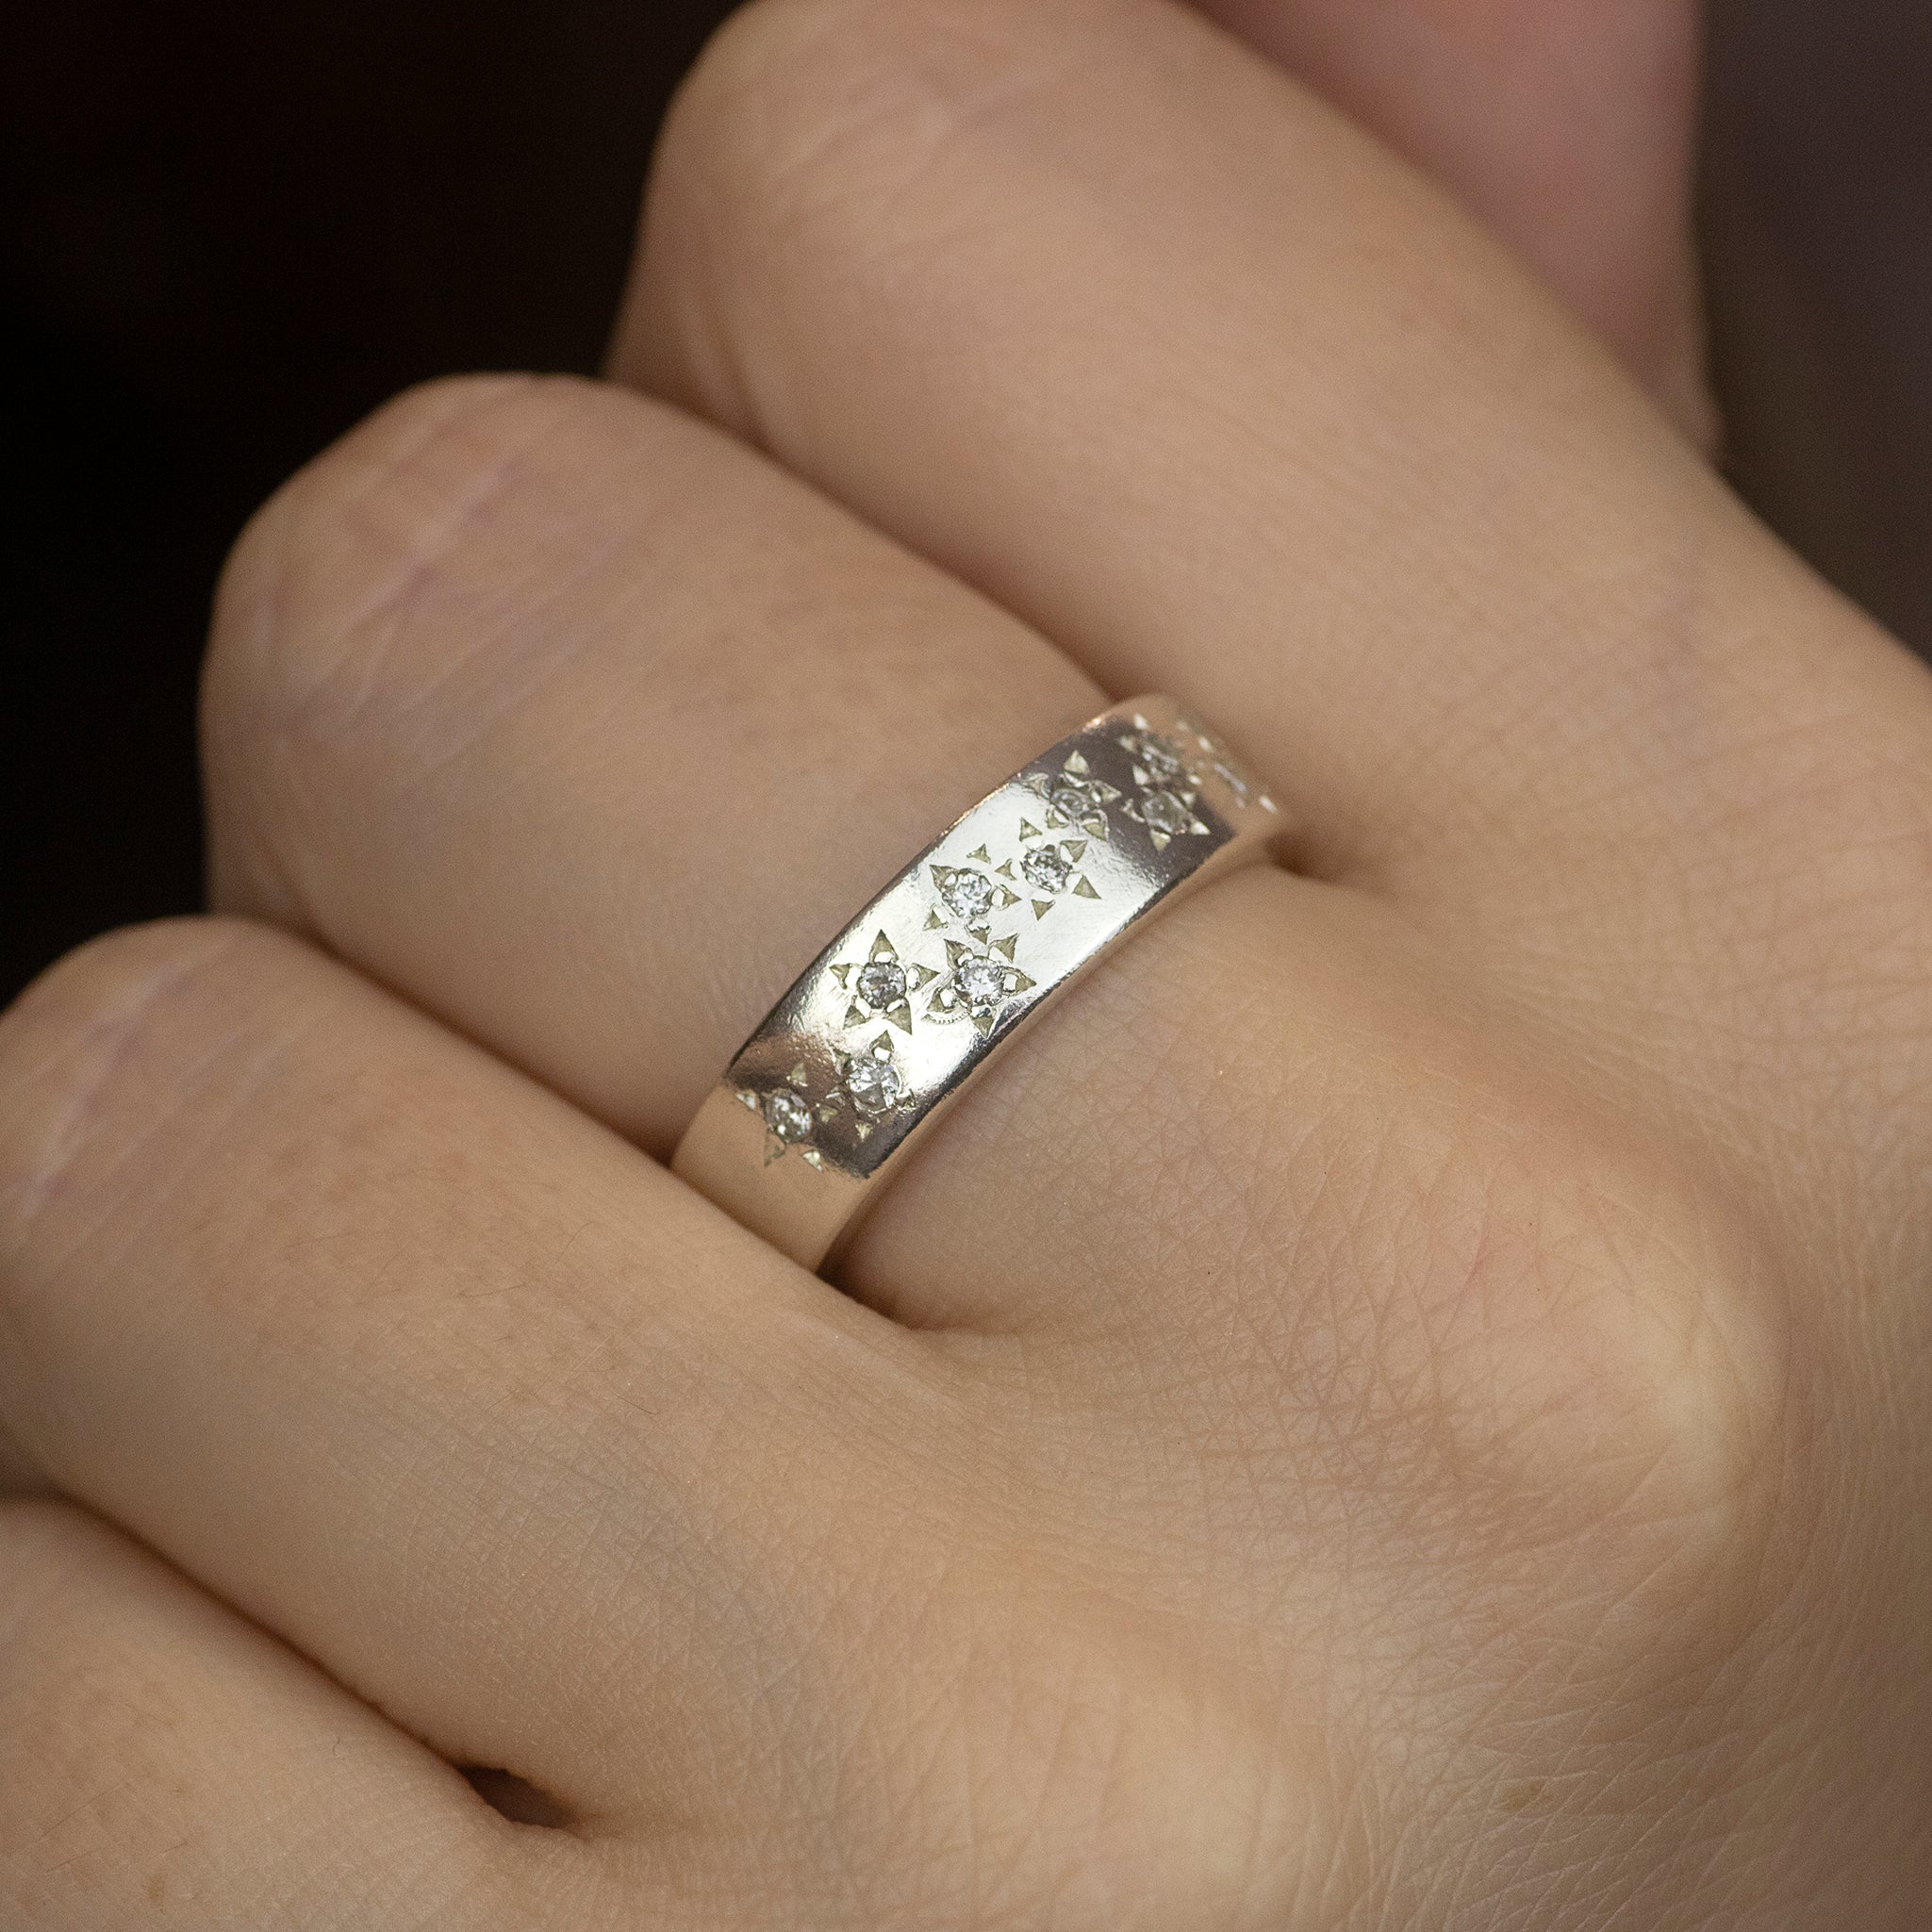 Buy 18K Gold Peridot ring, Birthday gift, Engagement ring online at  aStudio1980.com